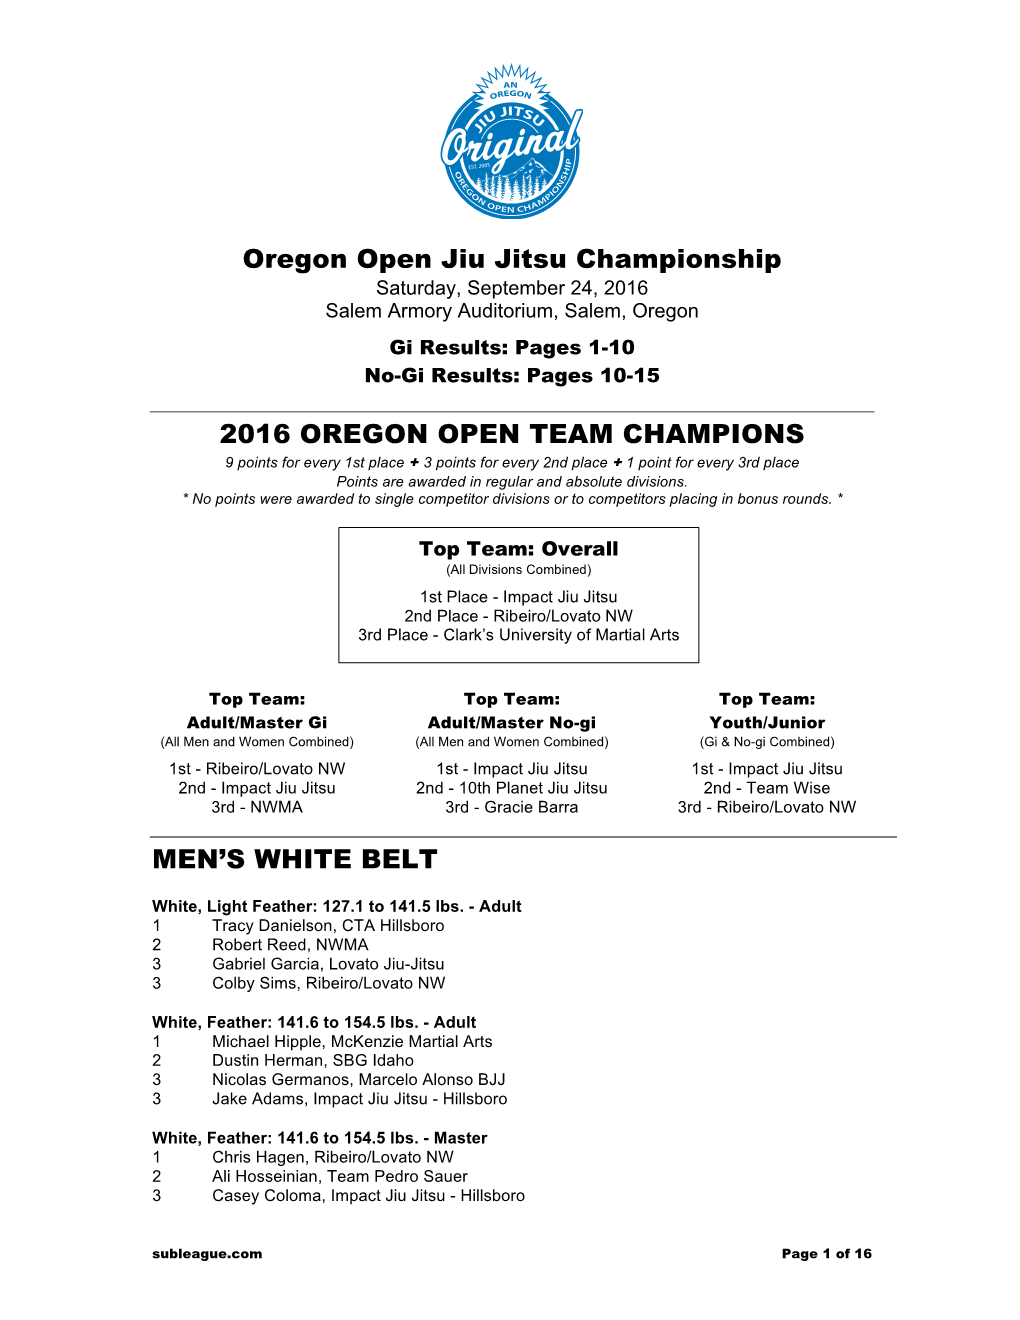 Oregon Open Jiu Jitsu Championship Saturday, September 24, 2016 Salem Armory Auditorium, Salem, Oregon Gi Results: Pages 1-10 No-Gi Results: Pages 10-15